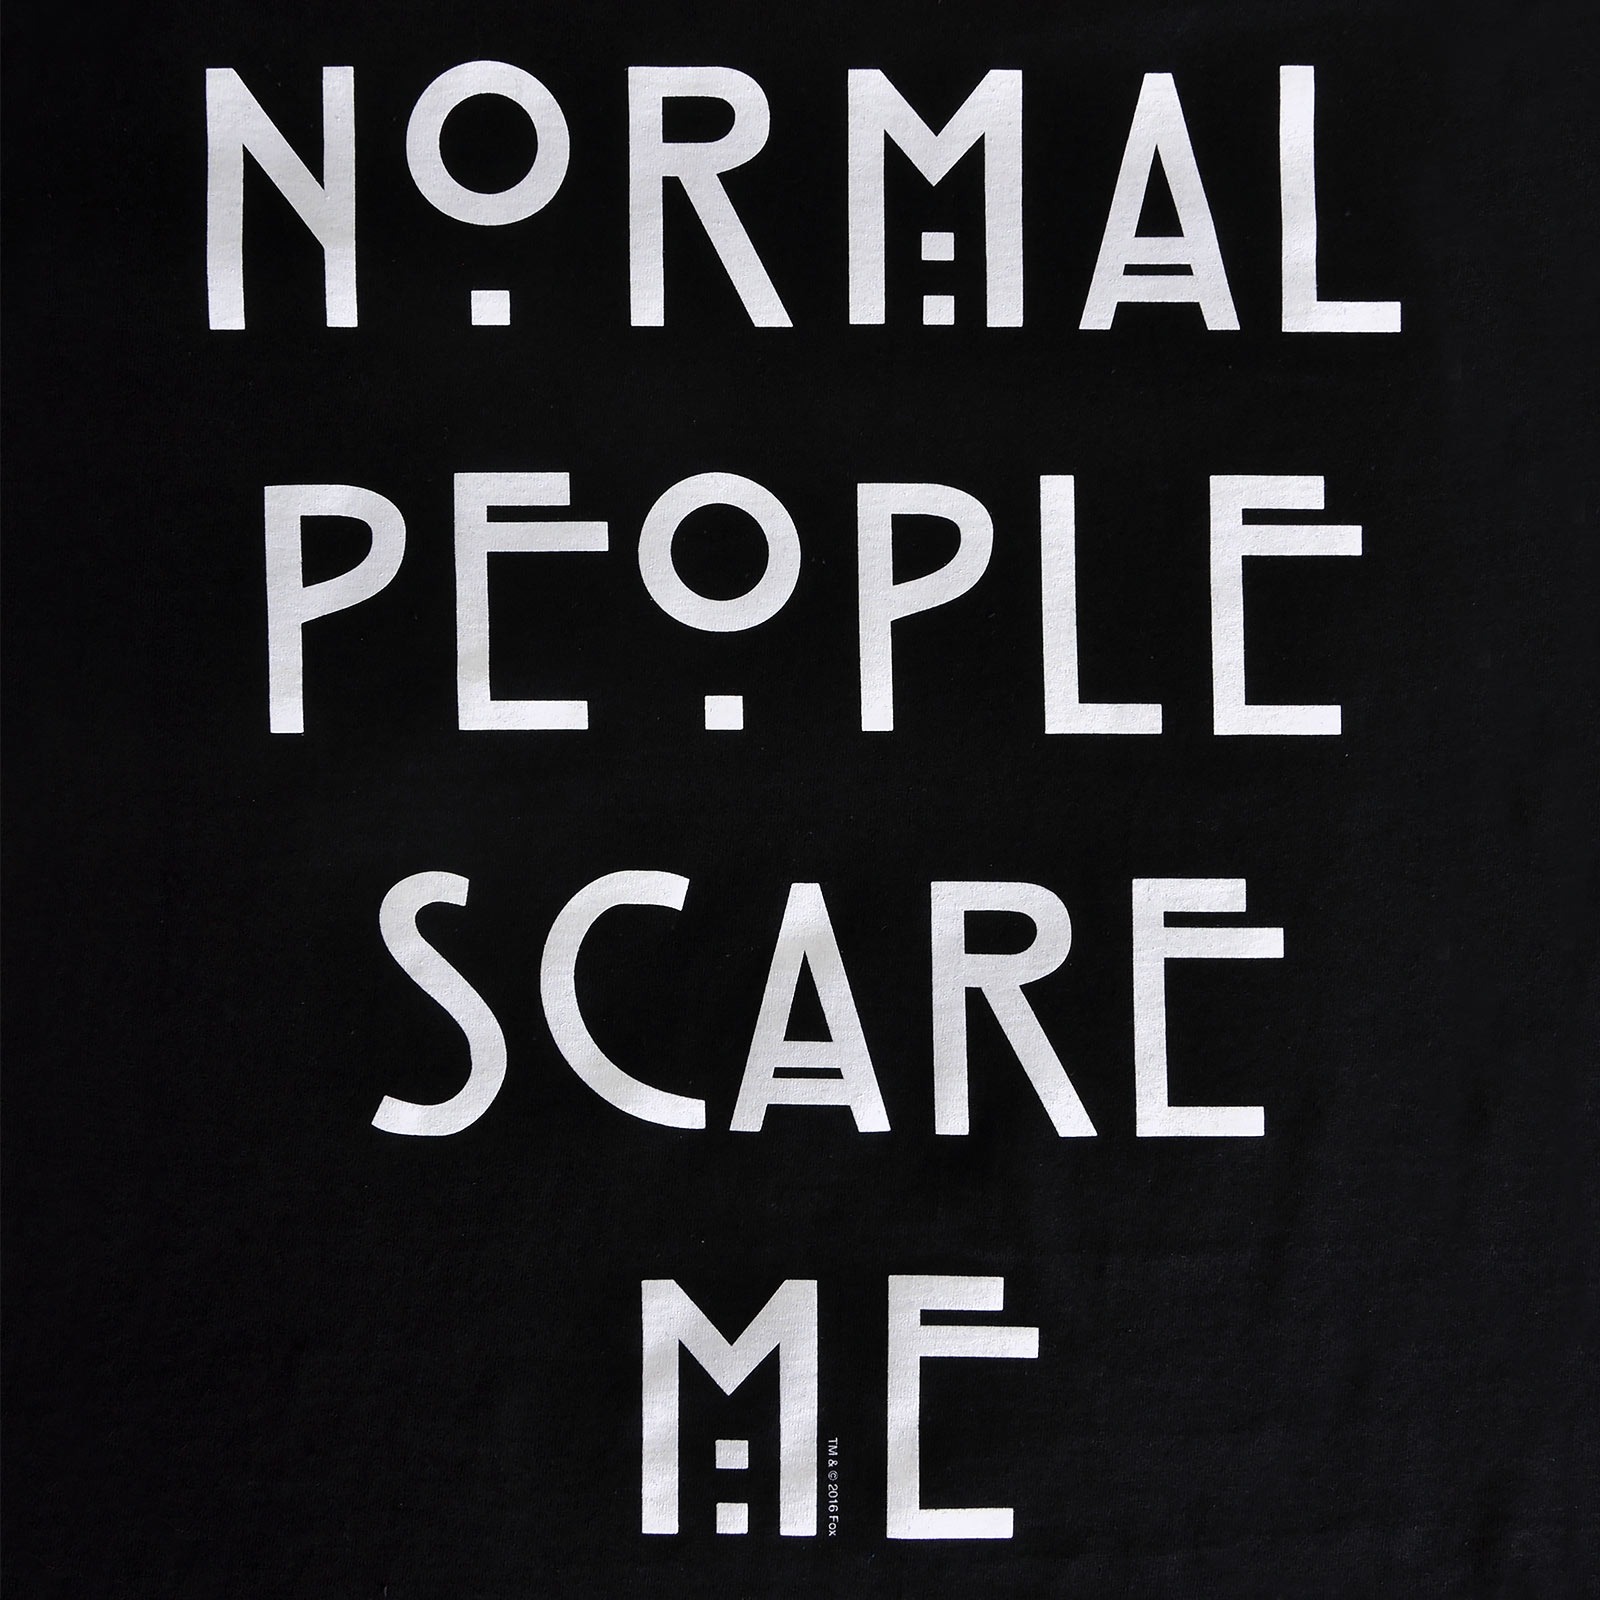 American Horror Story - Normale mensen maken me bang T-Shirt